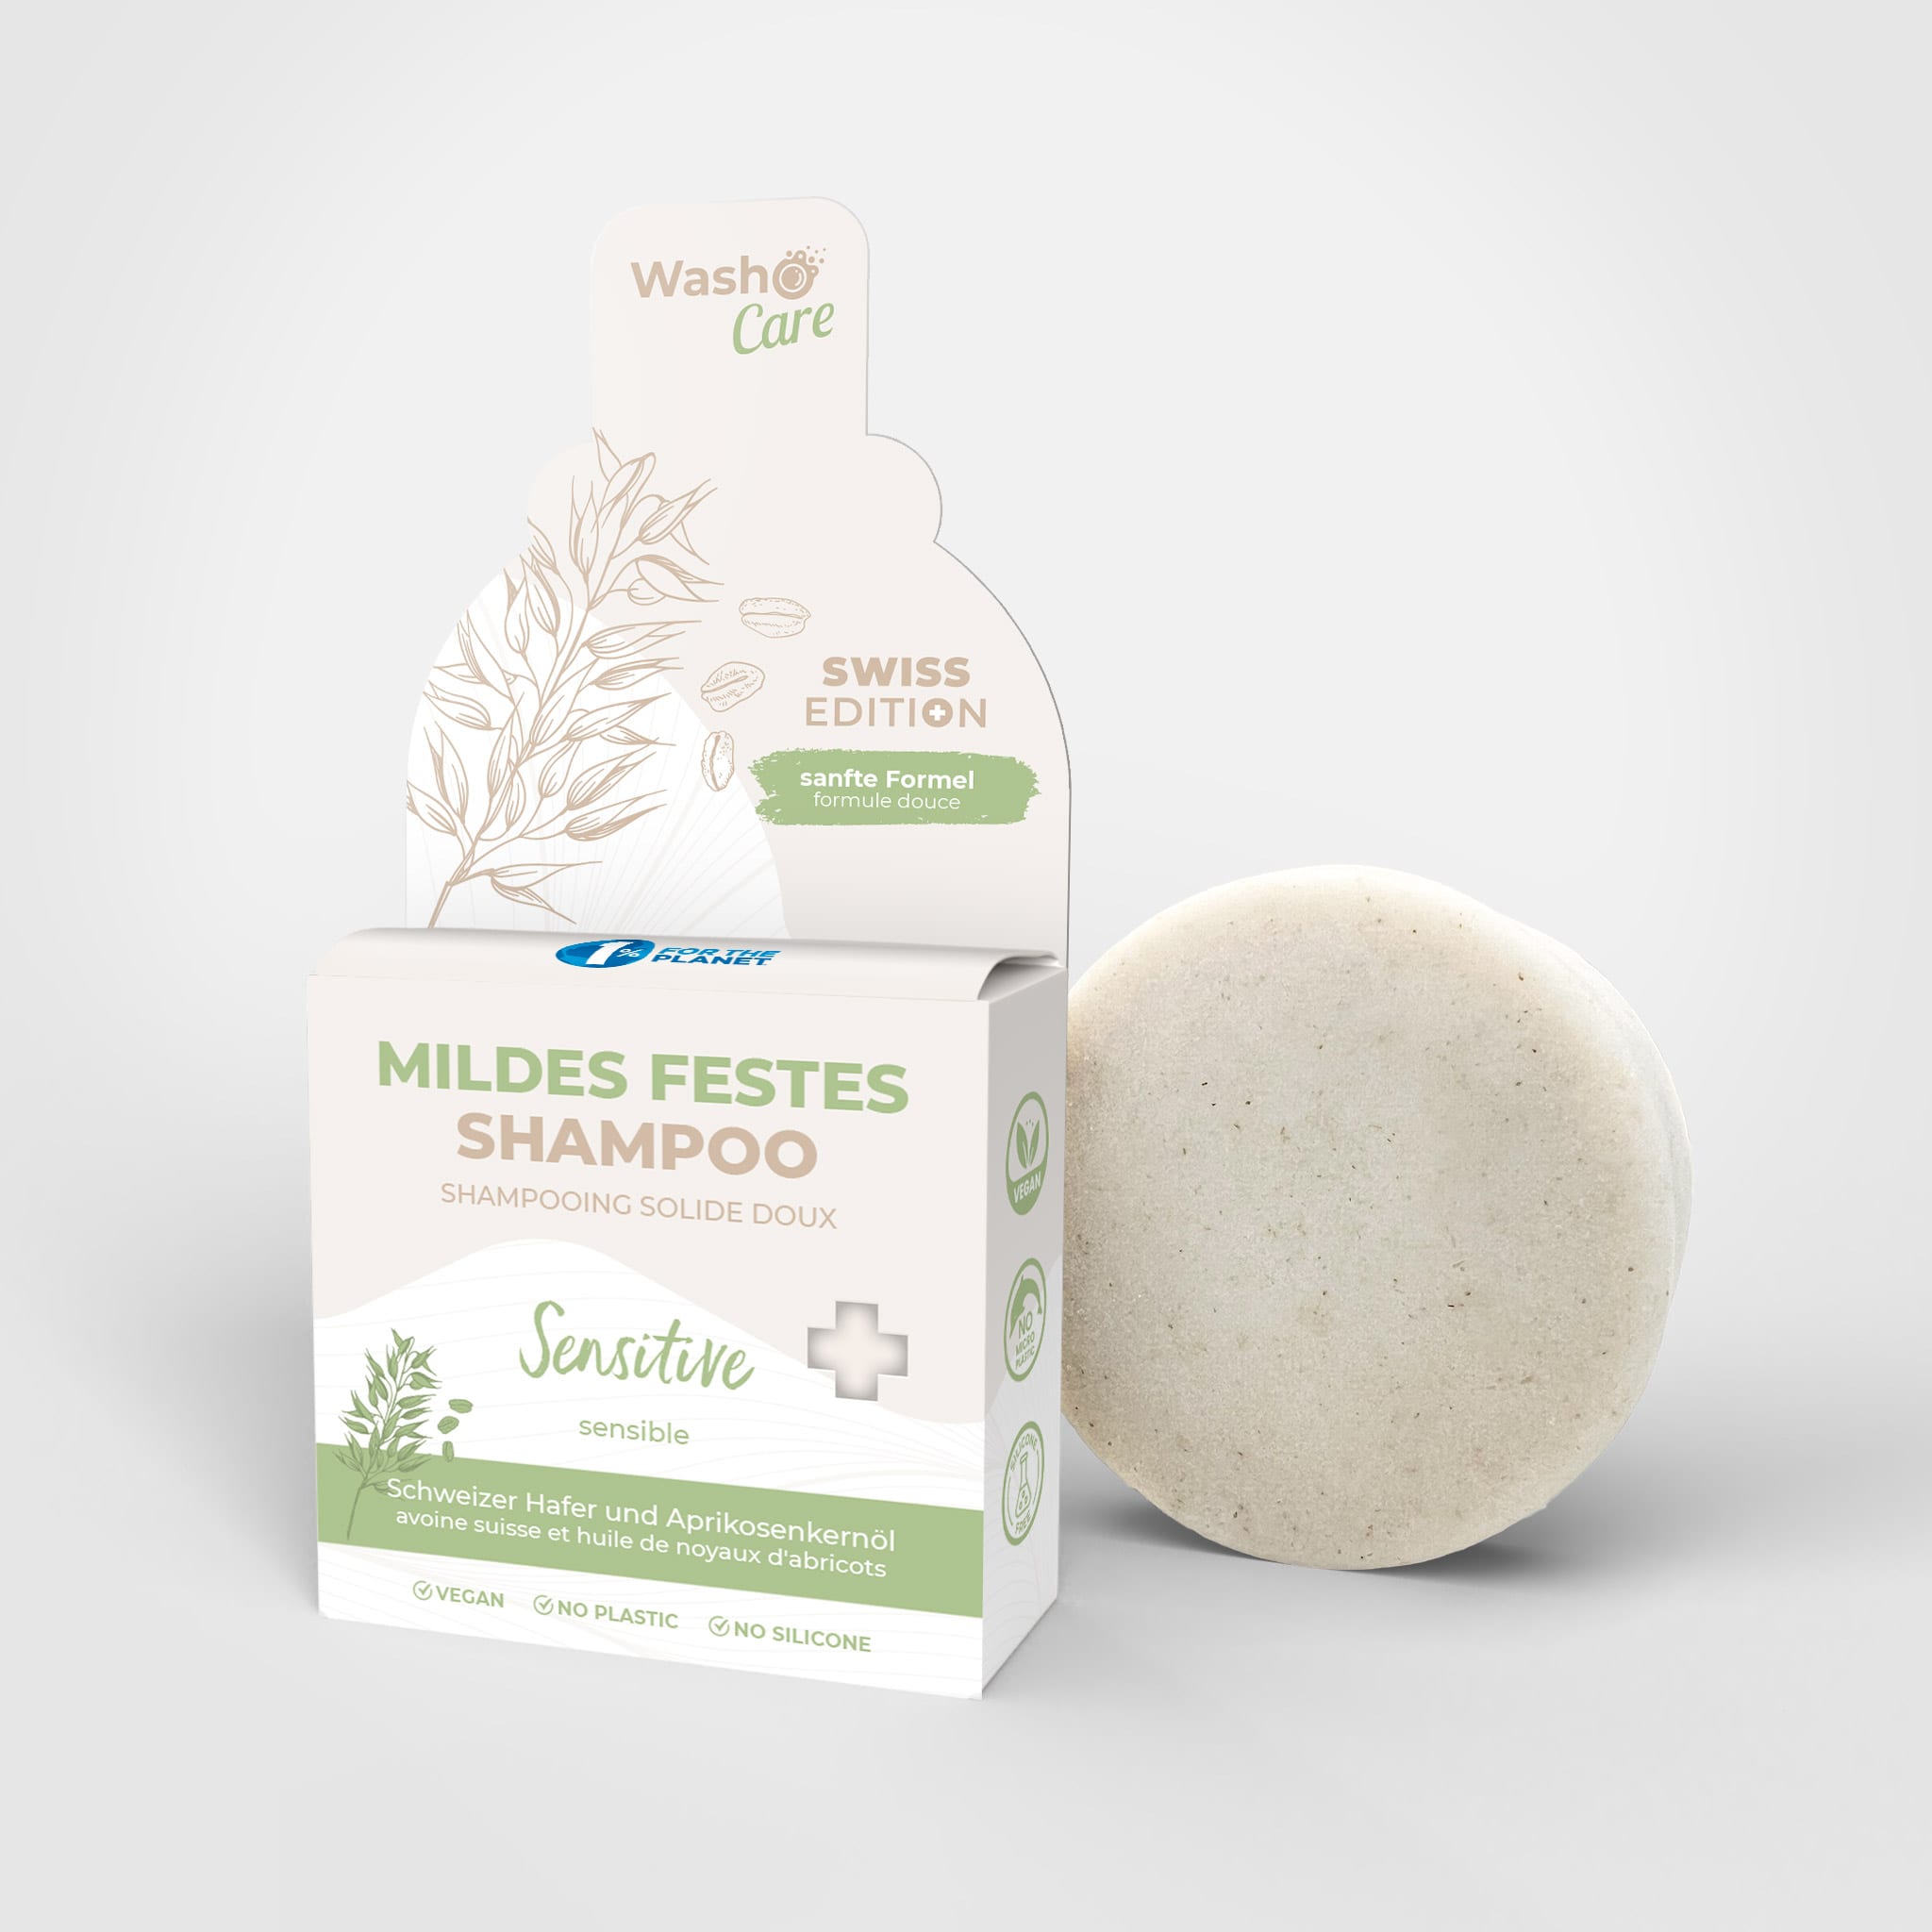 3 Washo Care Swiss Edition Mildes Festes Shampoo Sensitive - washo.ch